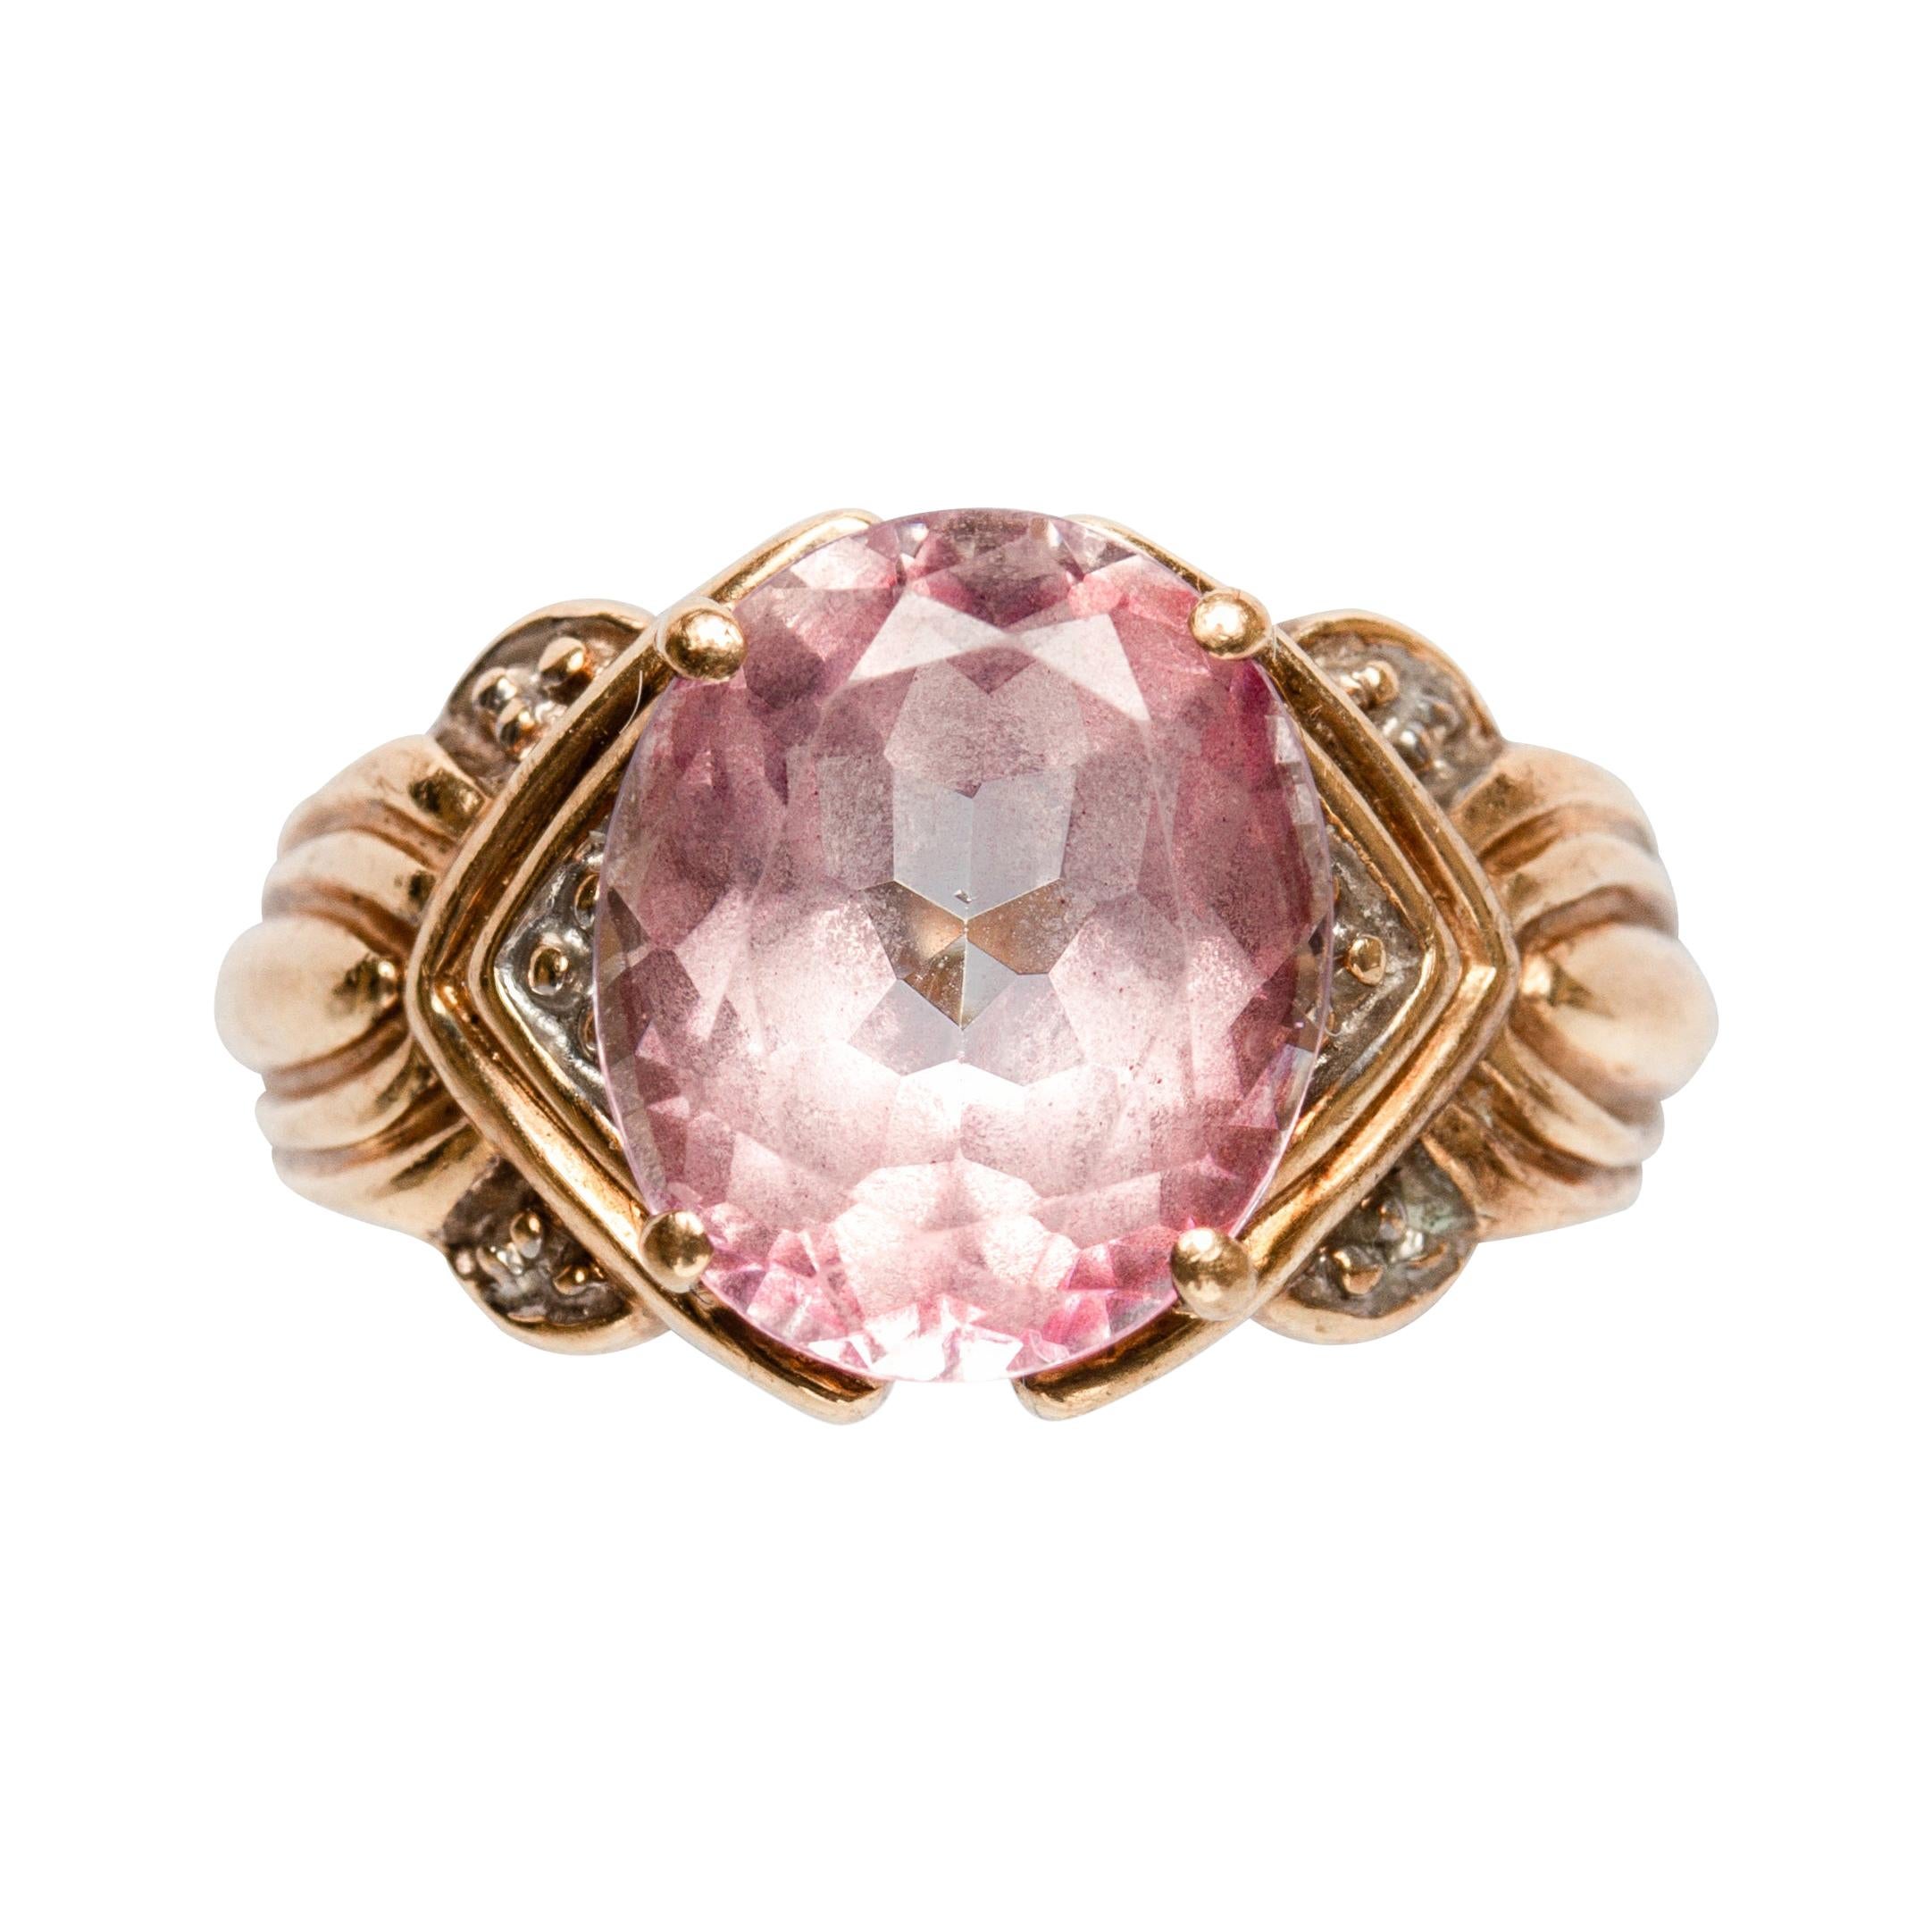 Vintage 10K Gold Pink Sapphire Ring